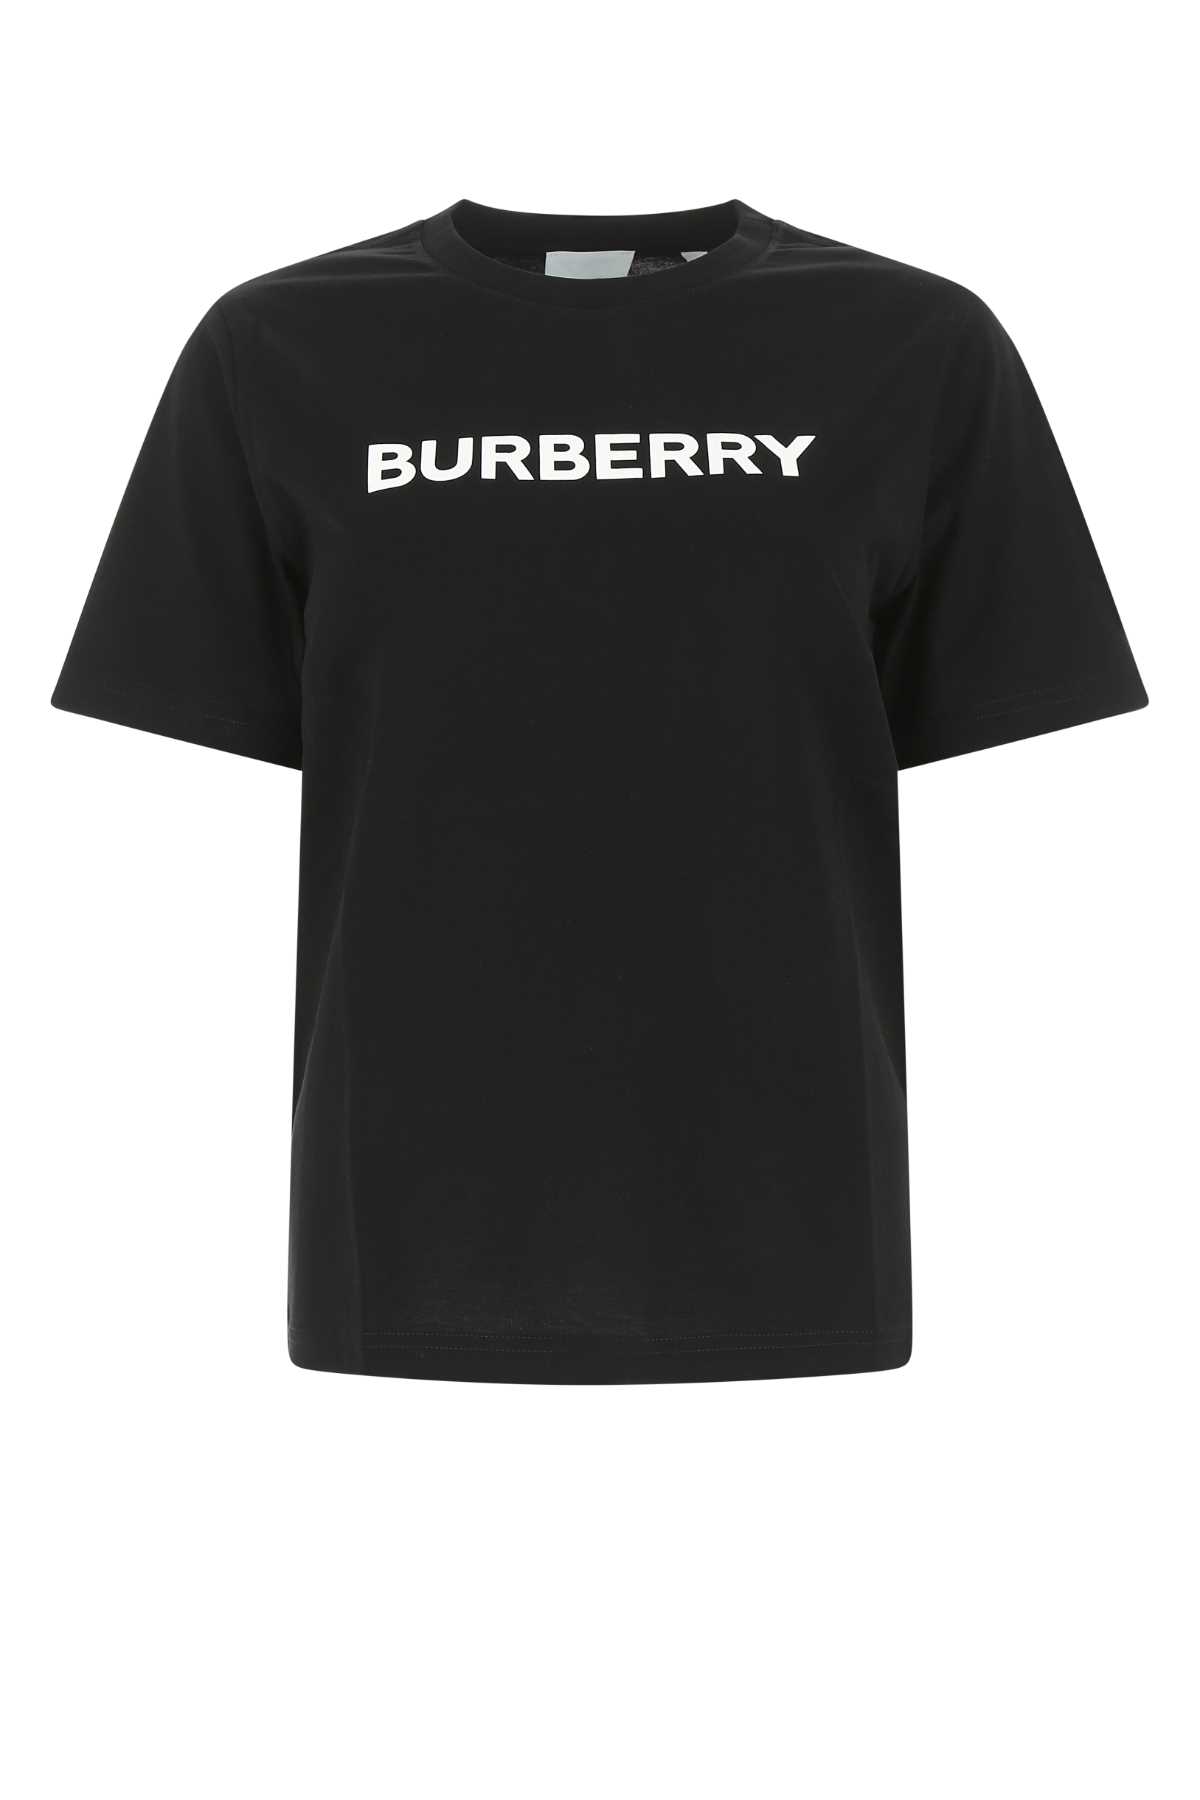 Shop Burberry Black Cotton T-shirt In A1189